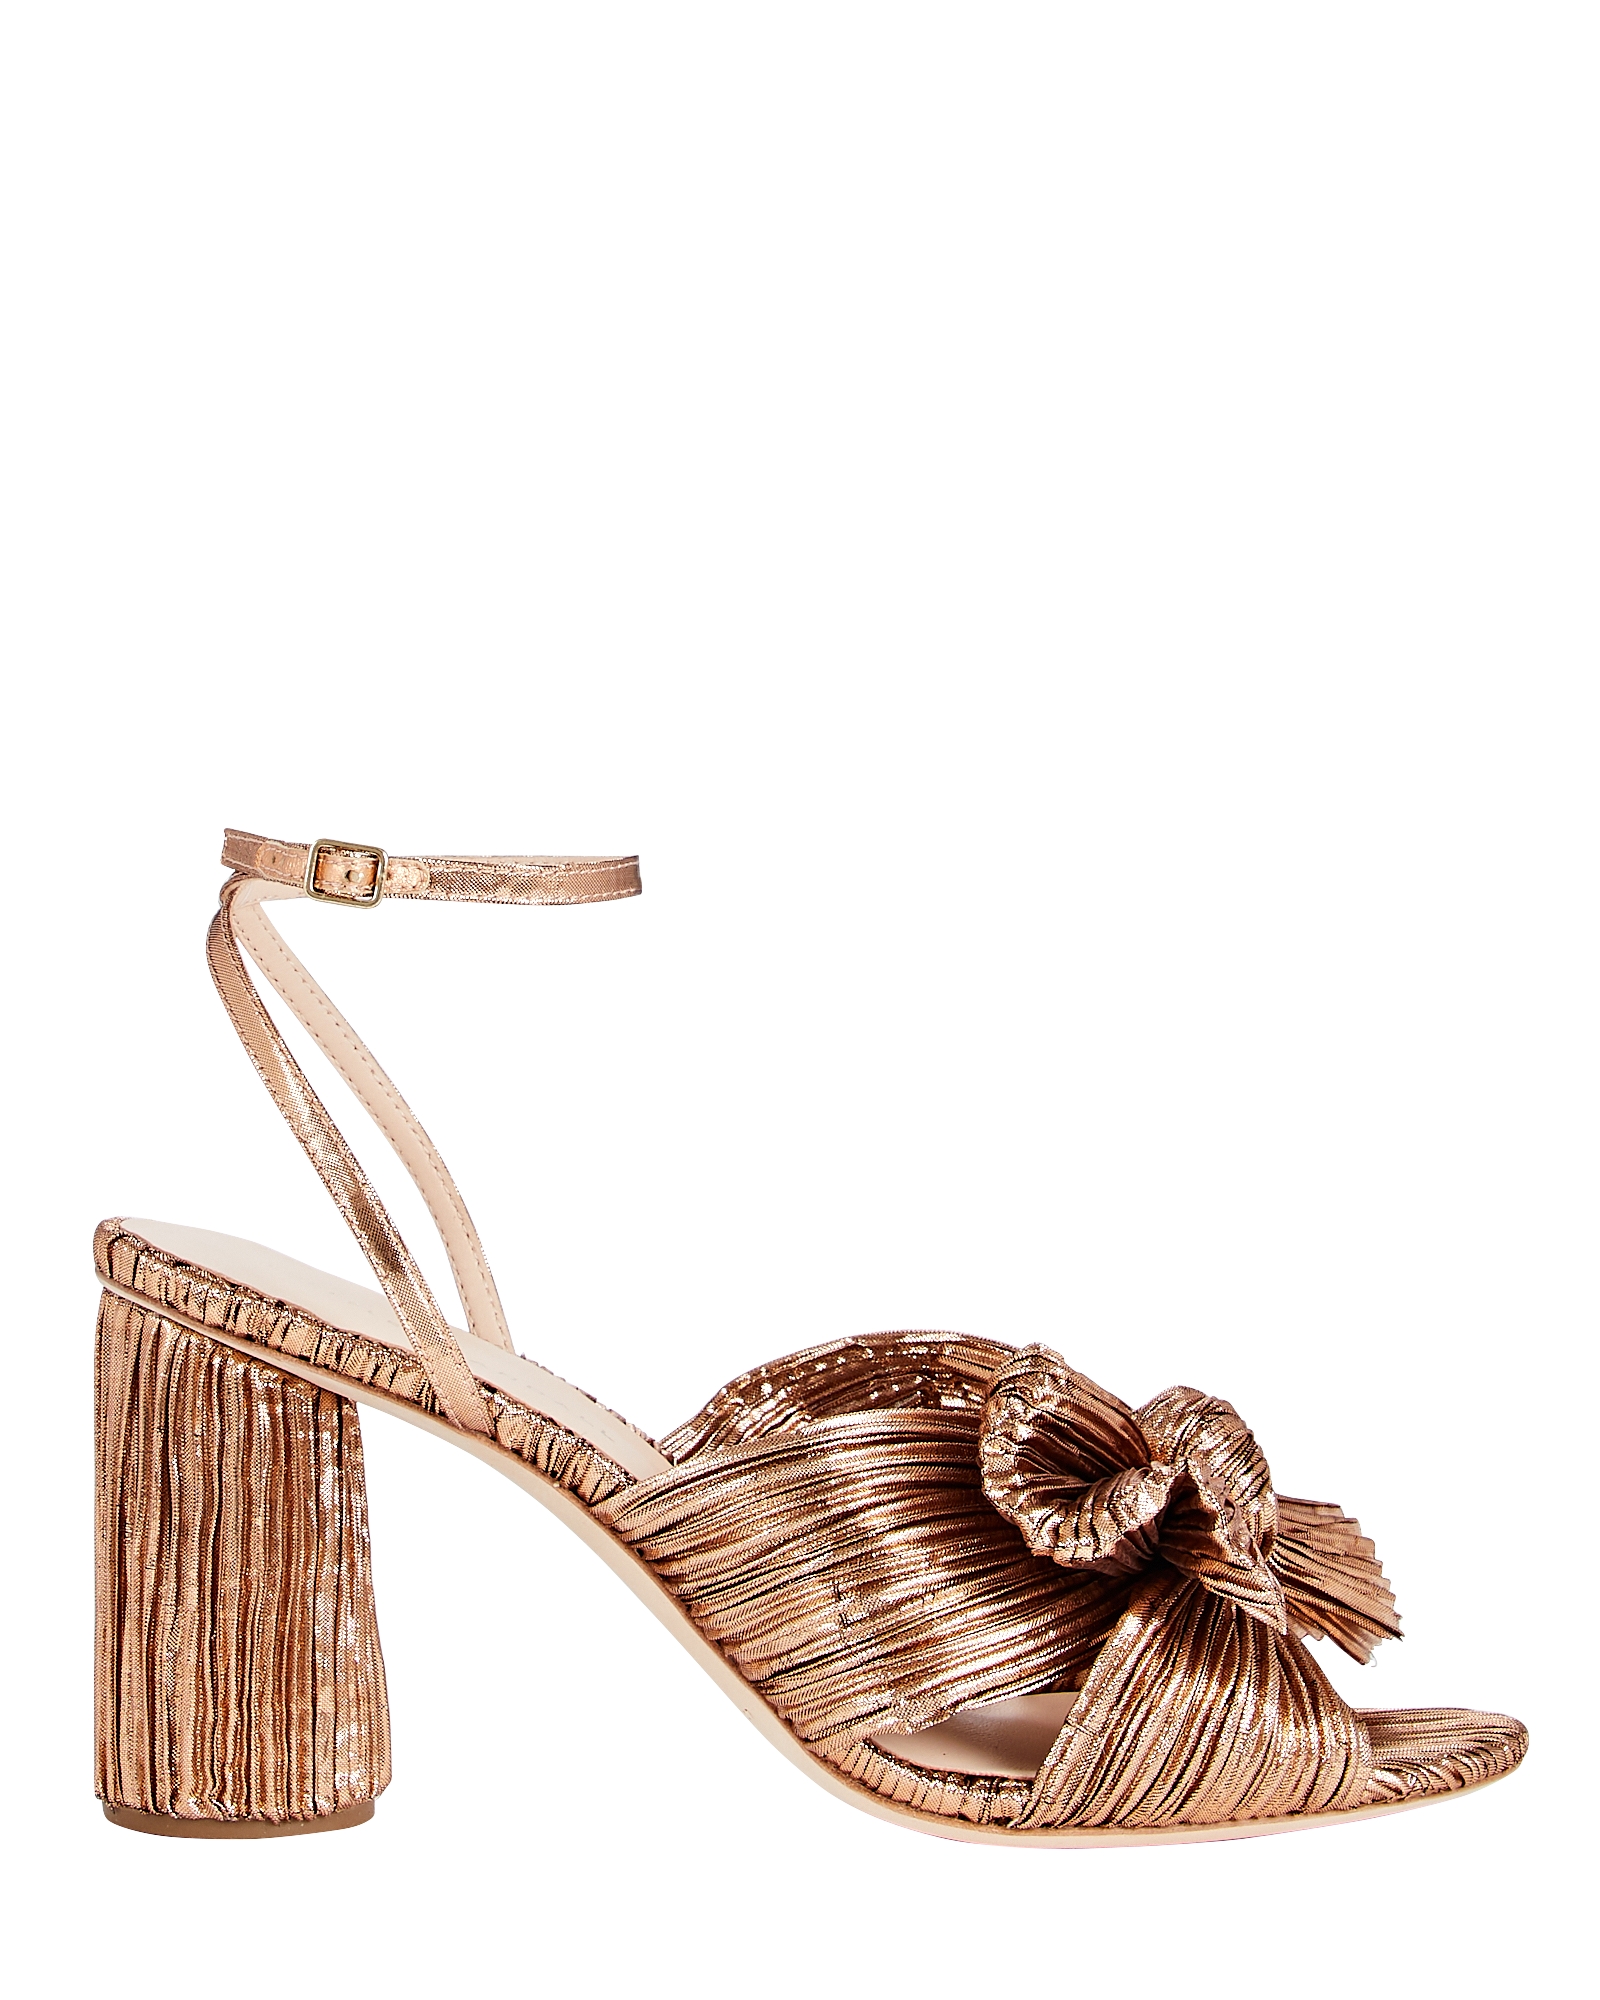 Loeffler Randall Camellia Bow Front Sandals | INTERMIX®